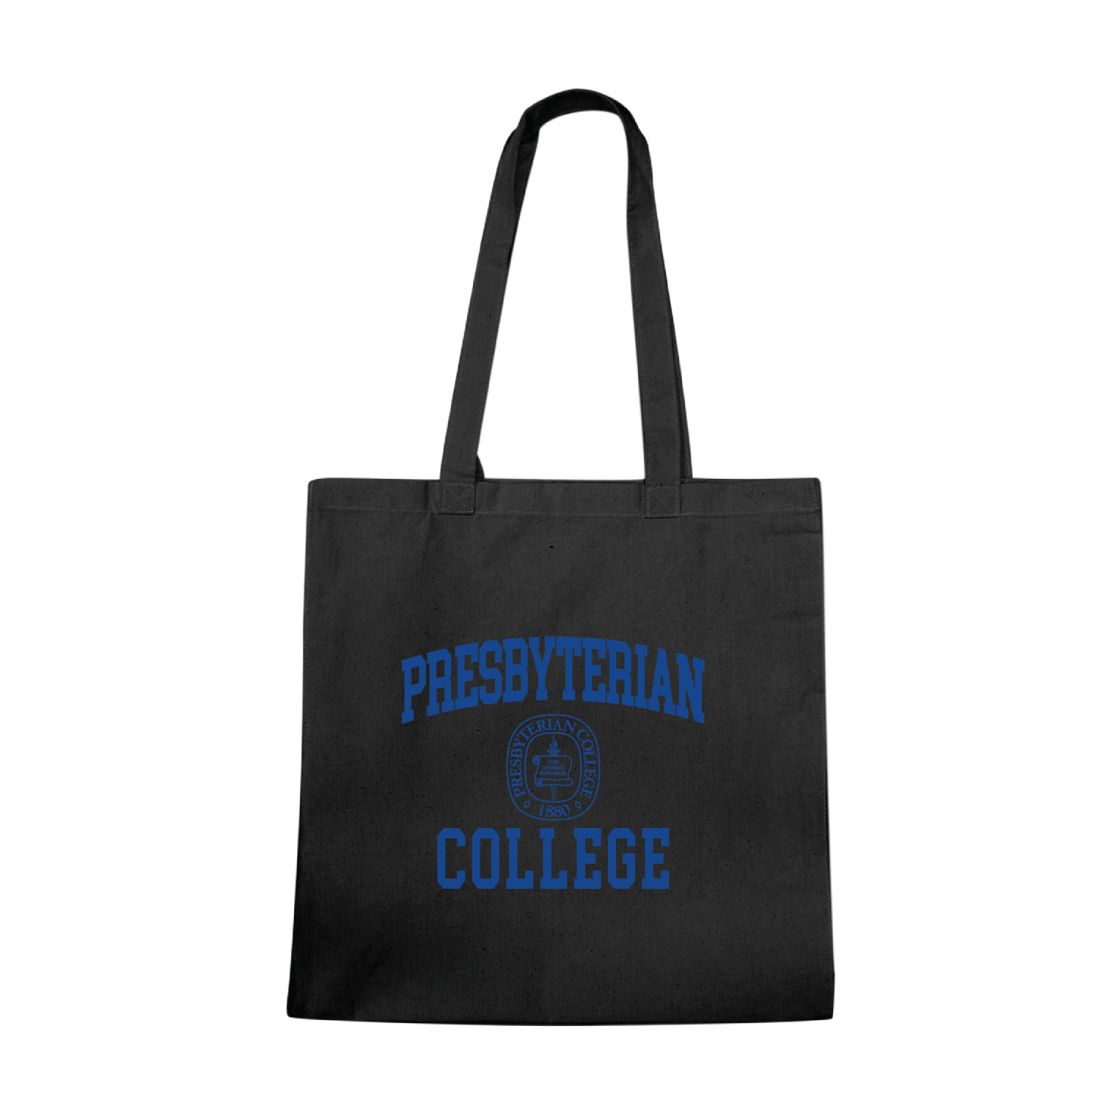 Presbyterian College Blue Hose Institutional Seal Tote Bag